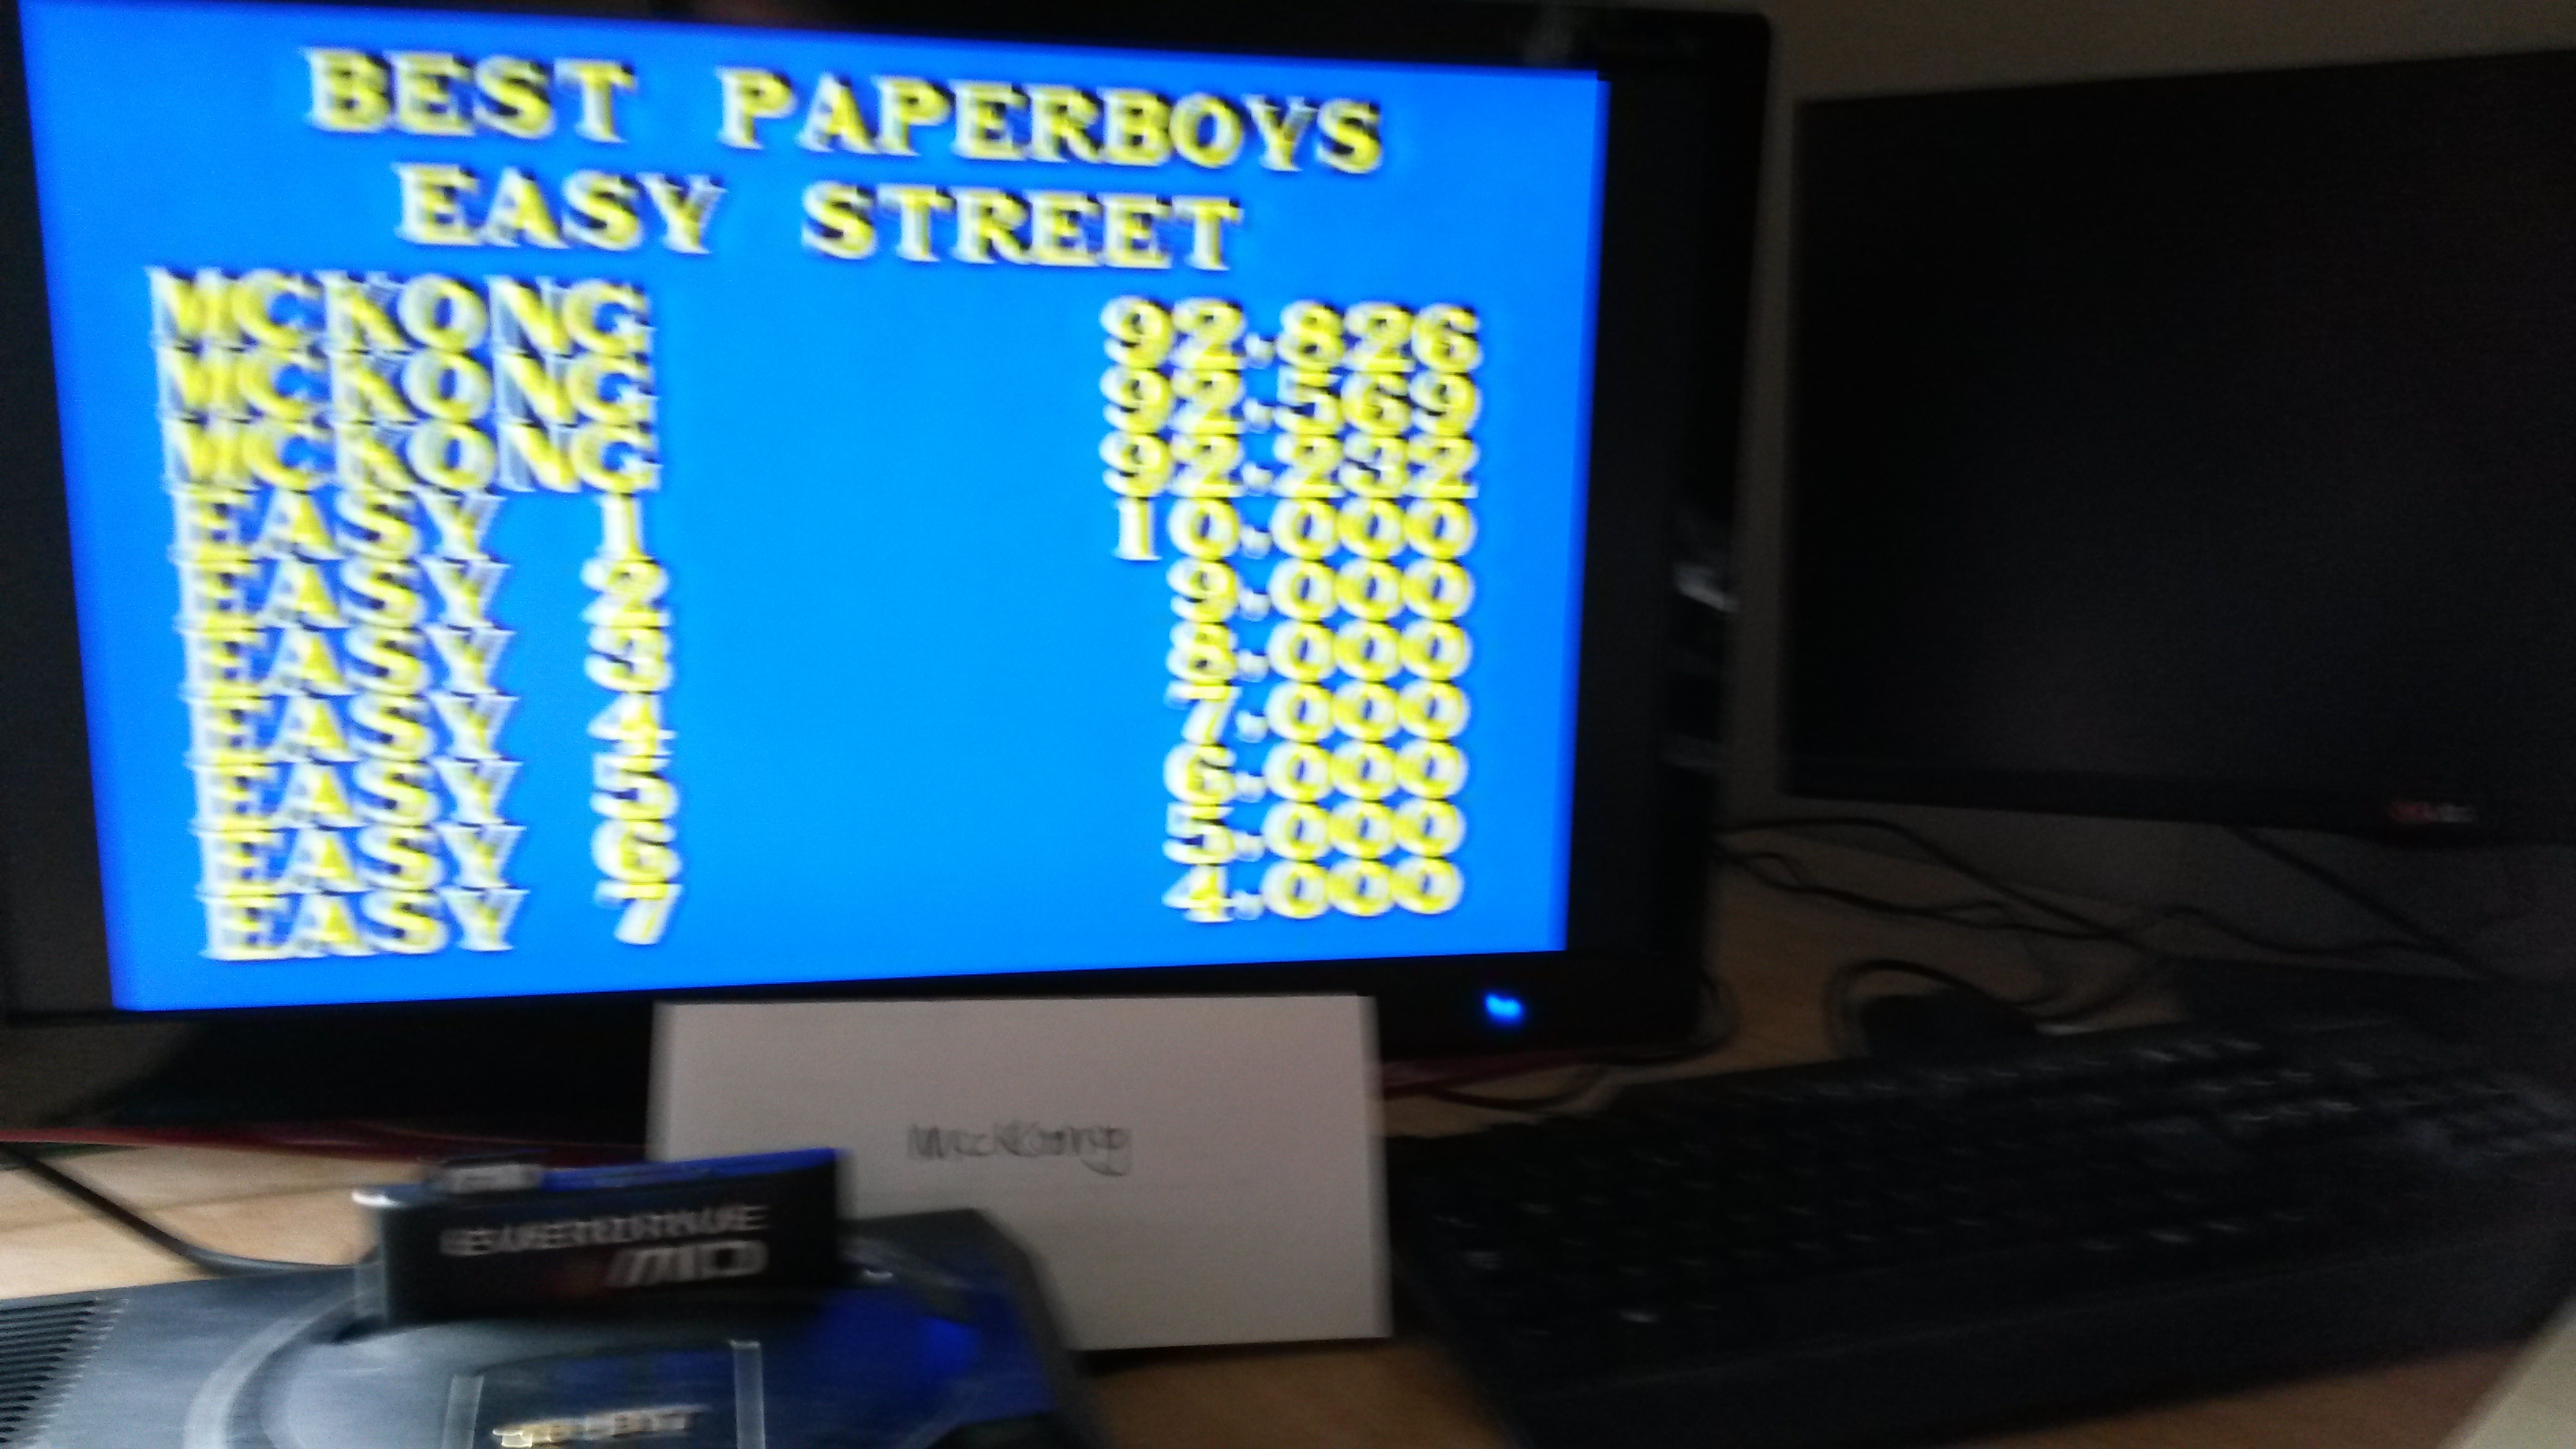 McKong: Paper Boy: Easy Street [Hard] (Sega Genesis / MegaDrive) 92,826 points on 2015-07-05 03:45:00